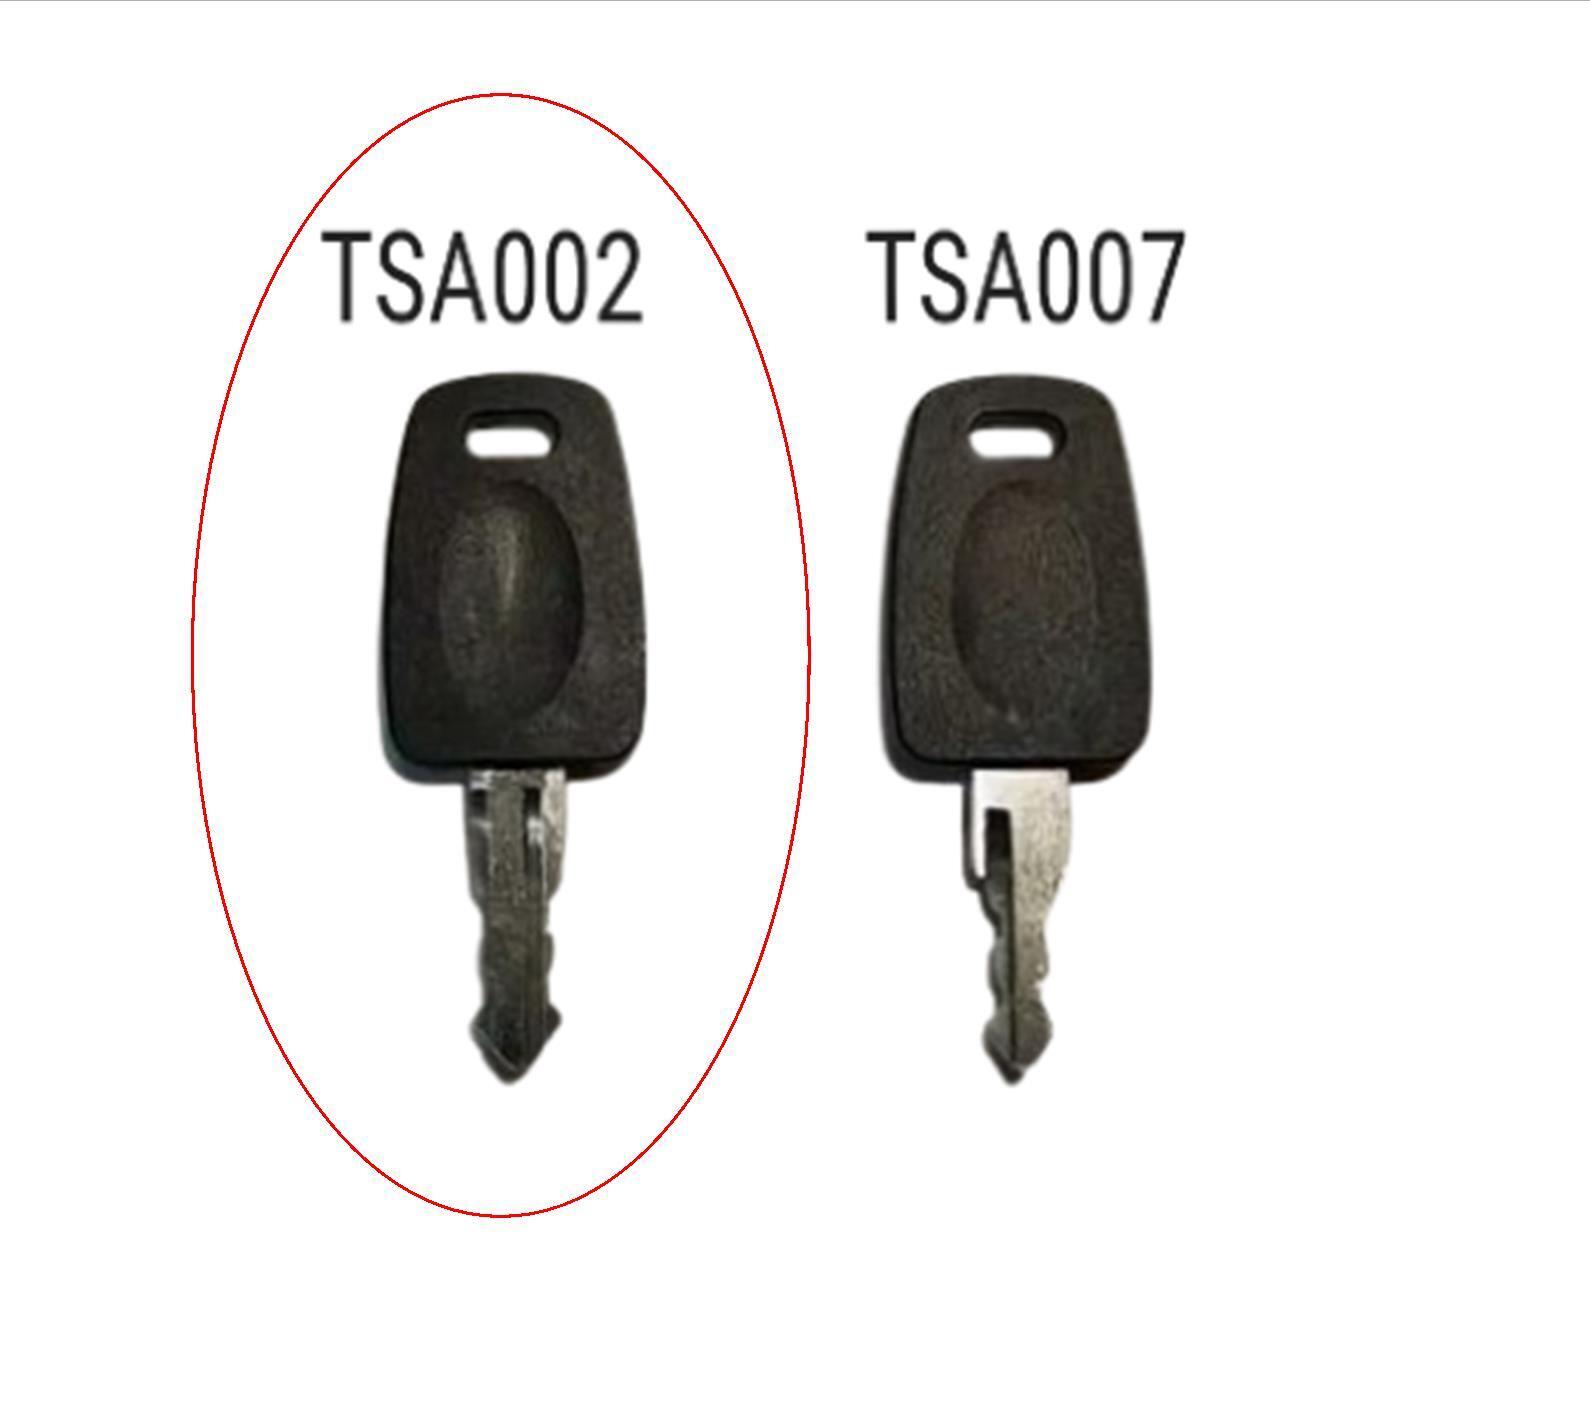 Travel Universal Luggage Suitcase Locks Security Lock Key for TSA002 or TSA007